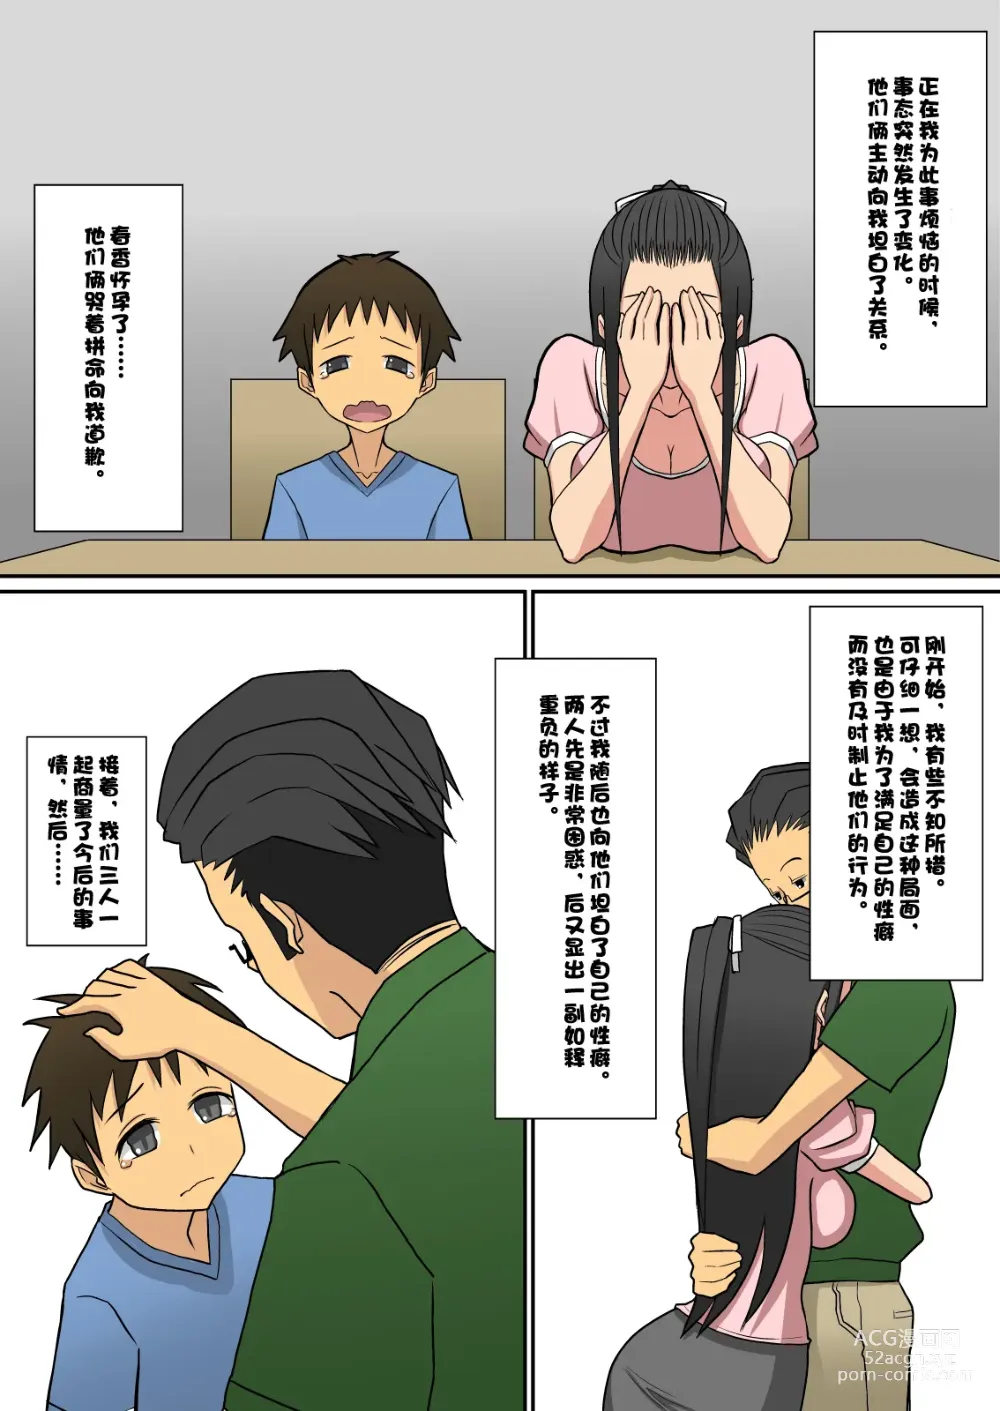 Page 72 of doujinshi [Hungry Set Meal] [Noriaki-kun and Haruka-san]